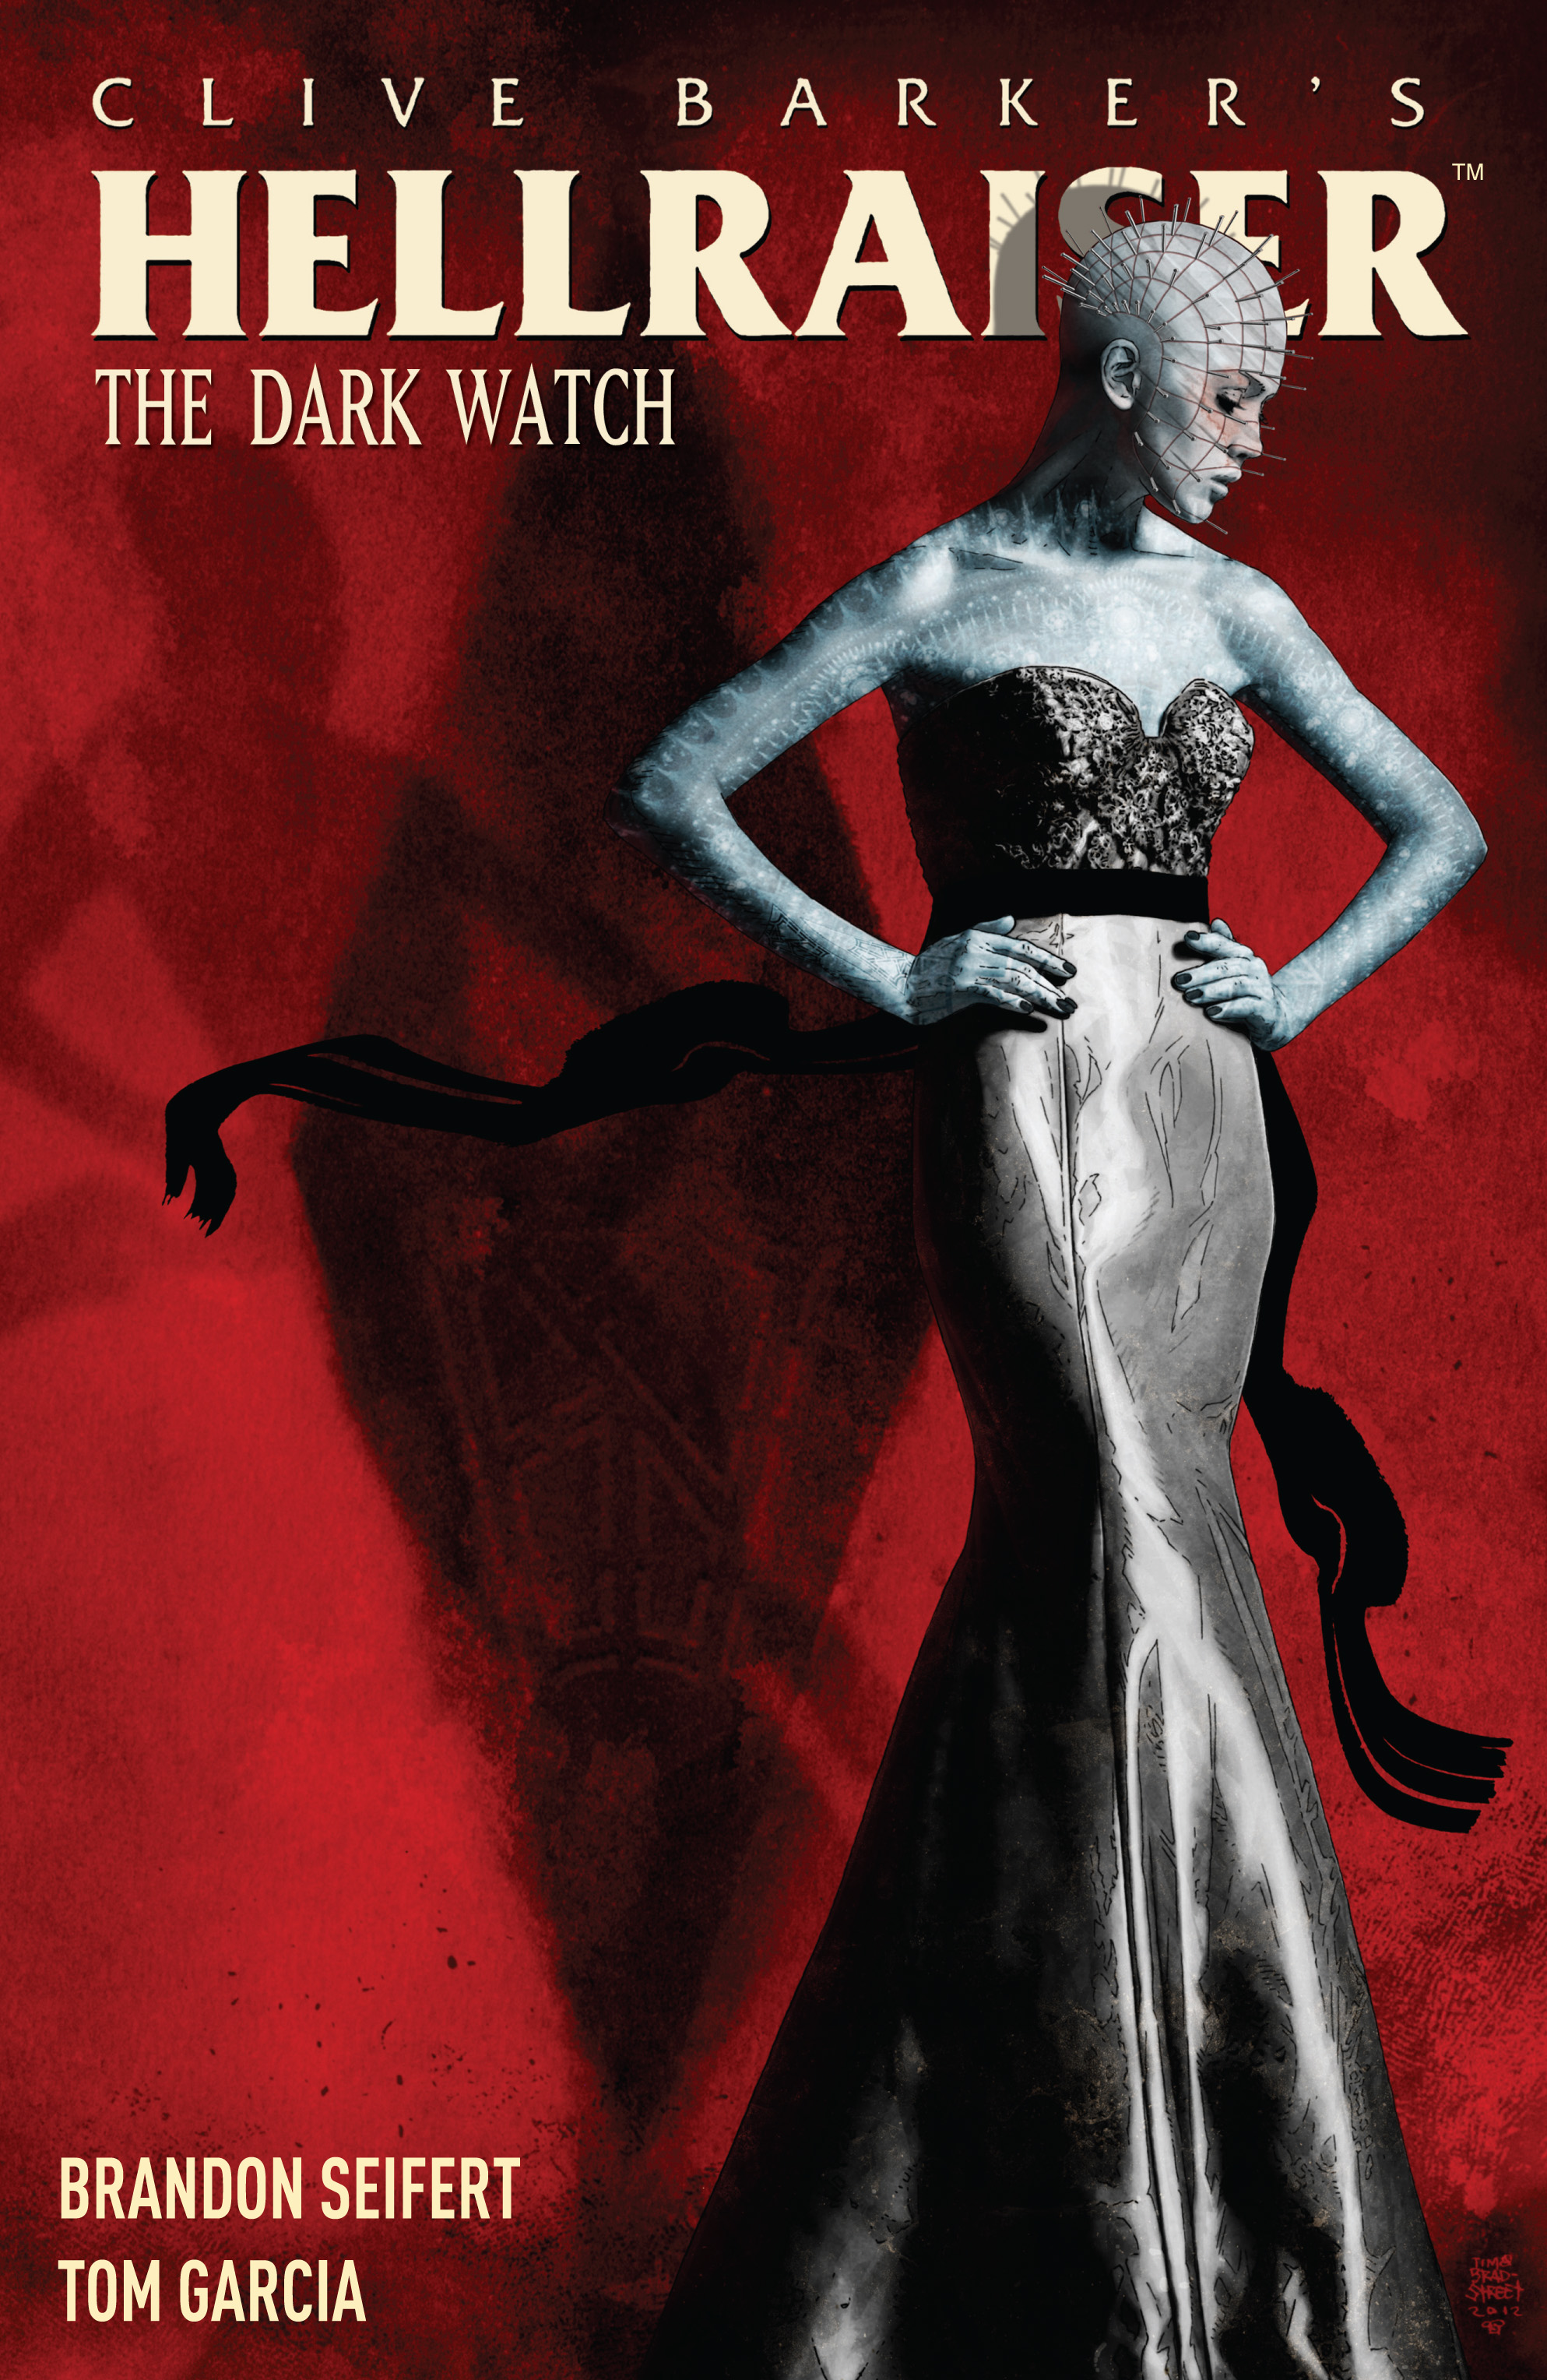 Read online Clive Barker's Hellraiser: The Dark Watch comic -  Issue # TPB 1 - 1